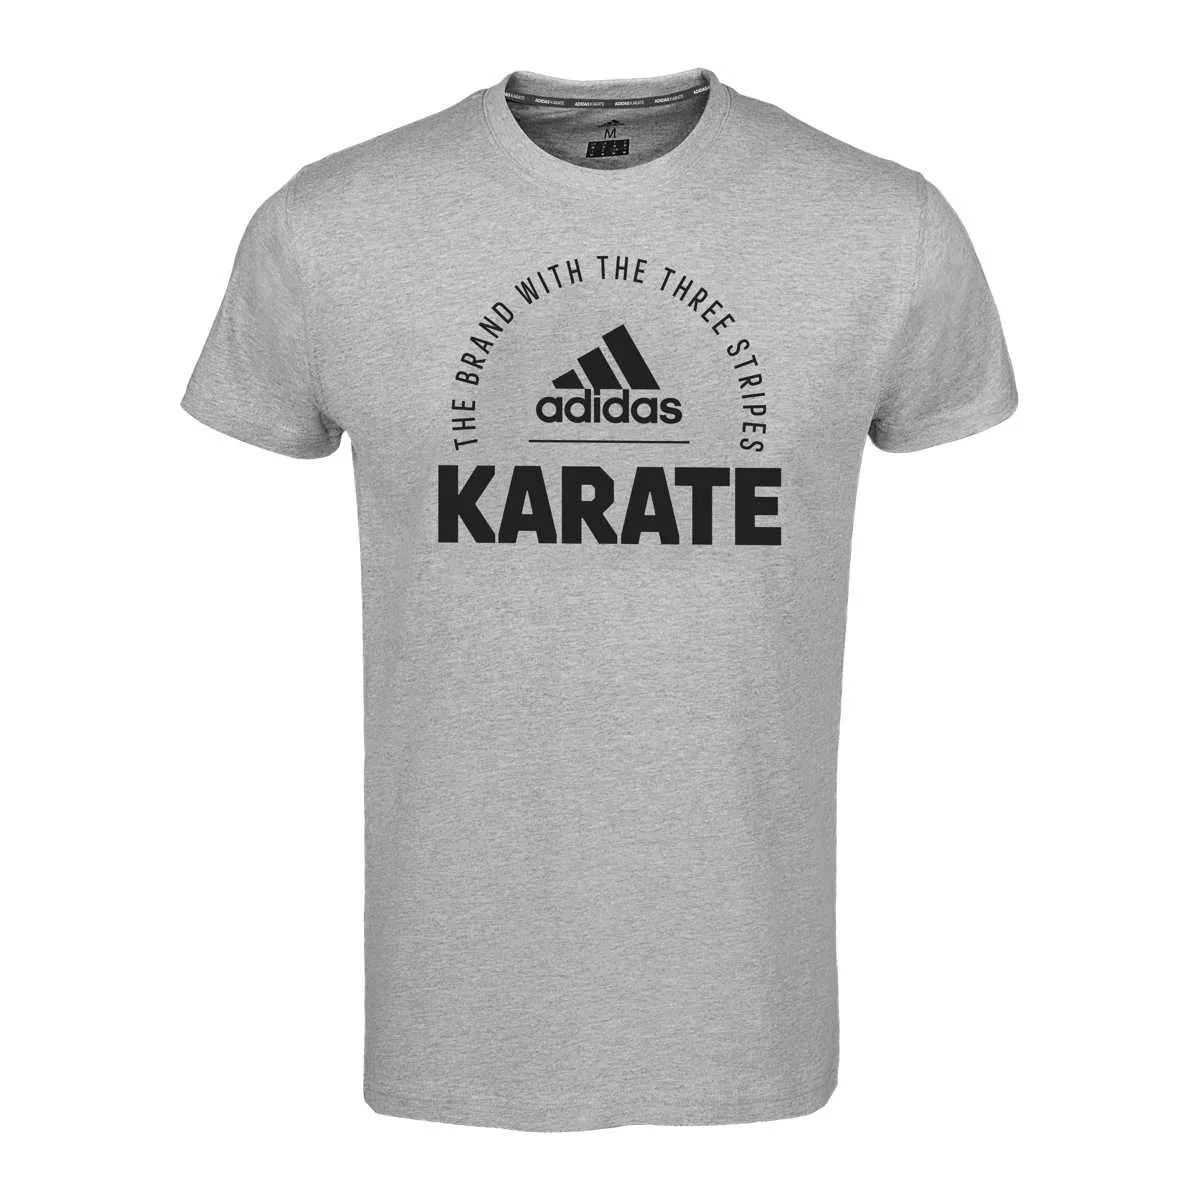 adidas T-Shirt Karate grey Community